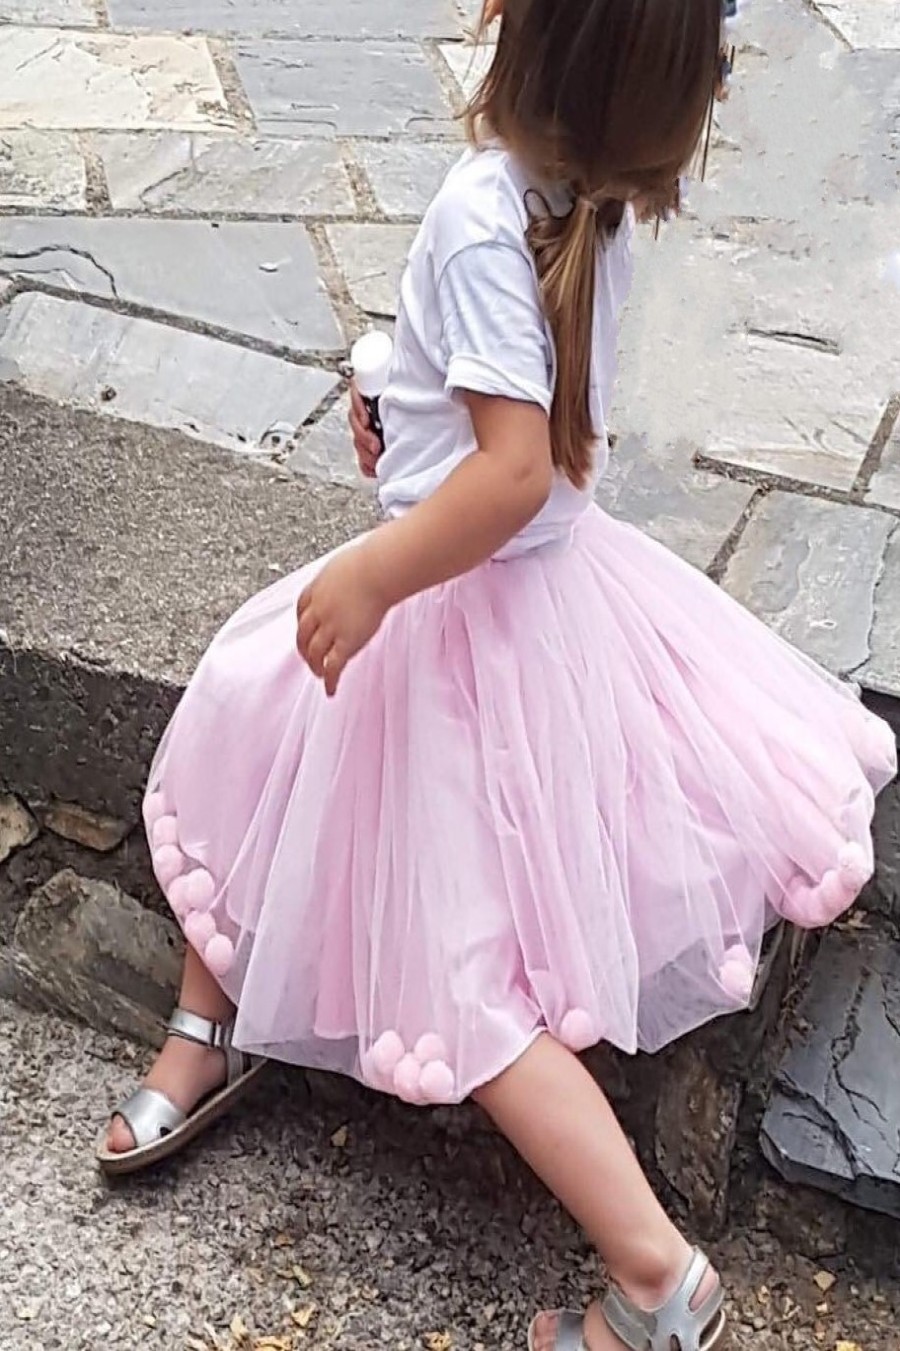 Tutu skirt with pom pom / pink tassels